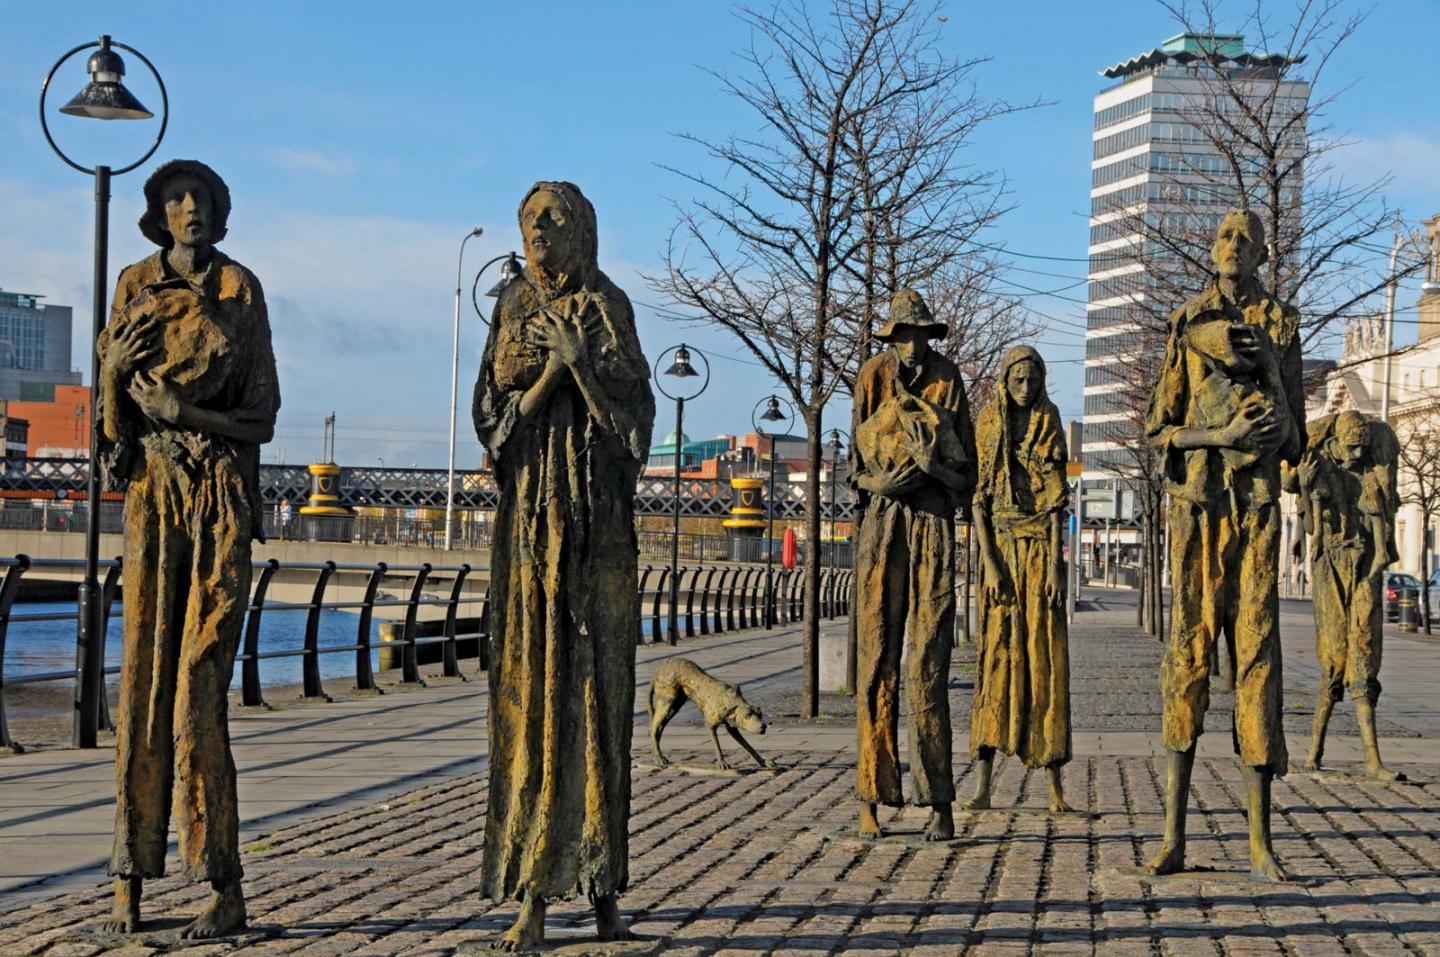 'Famine' by Rowan Gillespie (1997), sculpture in Dublin commemorating the Irish Great Famine